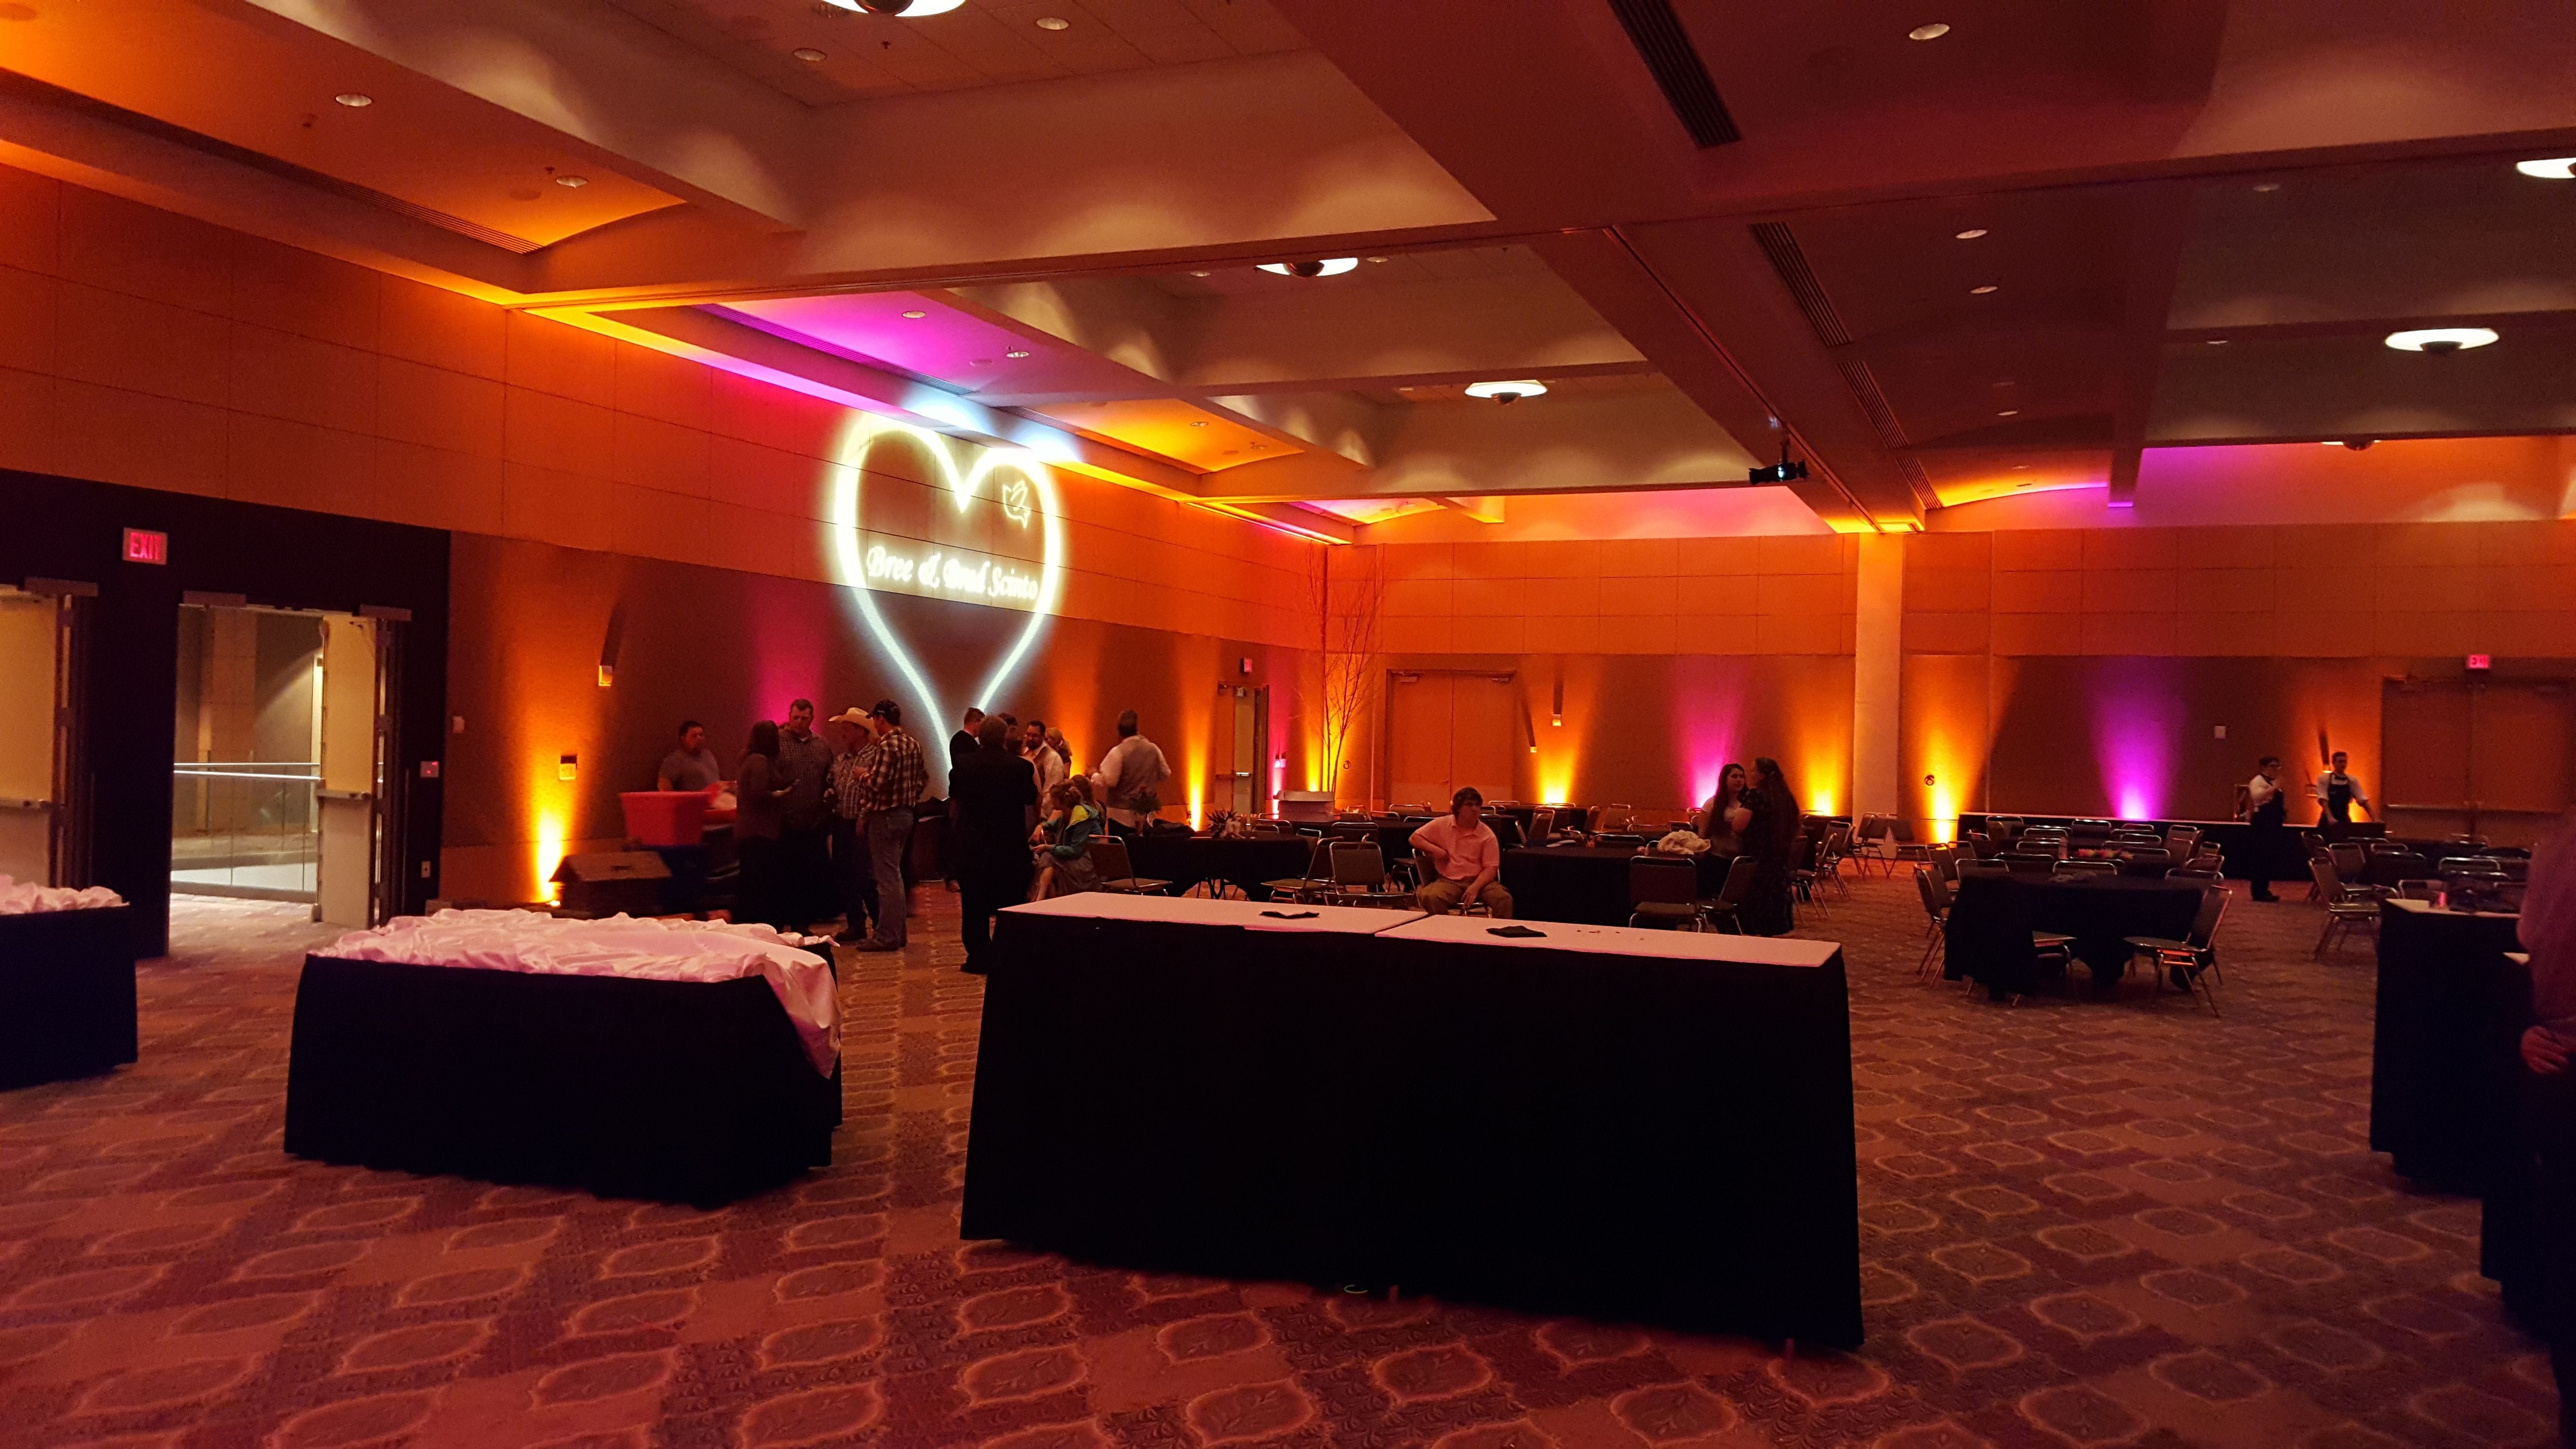 Harbor Side Ballroom, DECC.
Wedding lighting in pink and orange with wedding monogram.